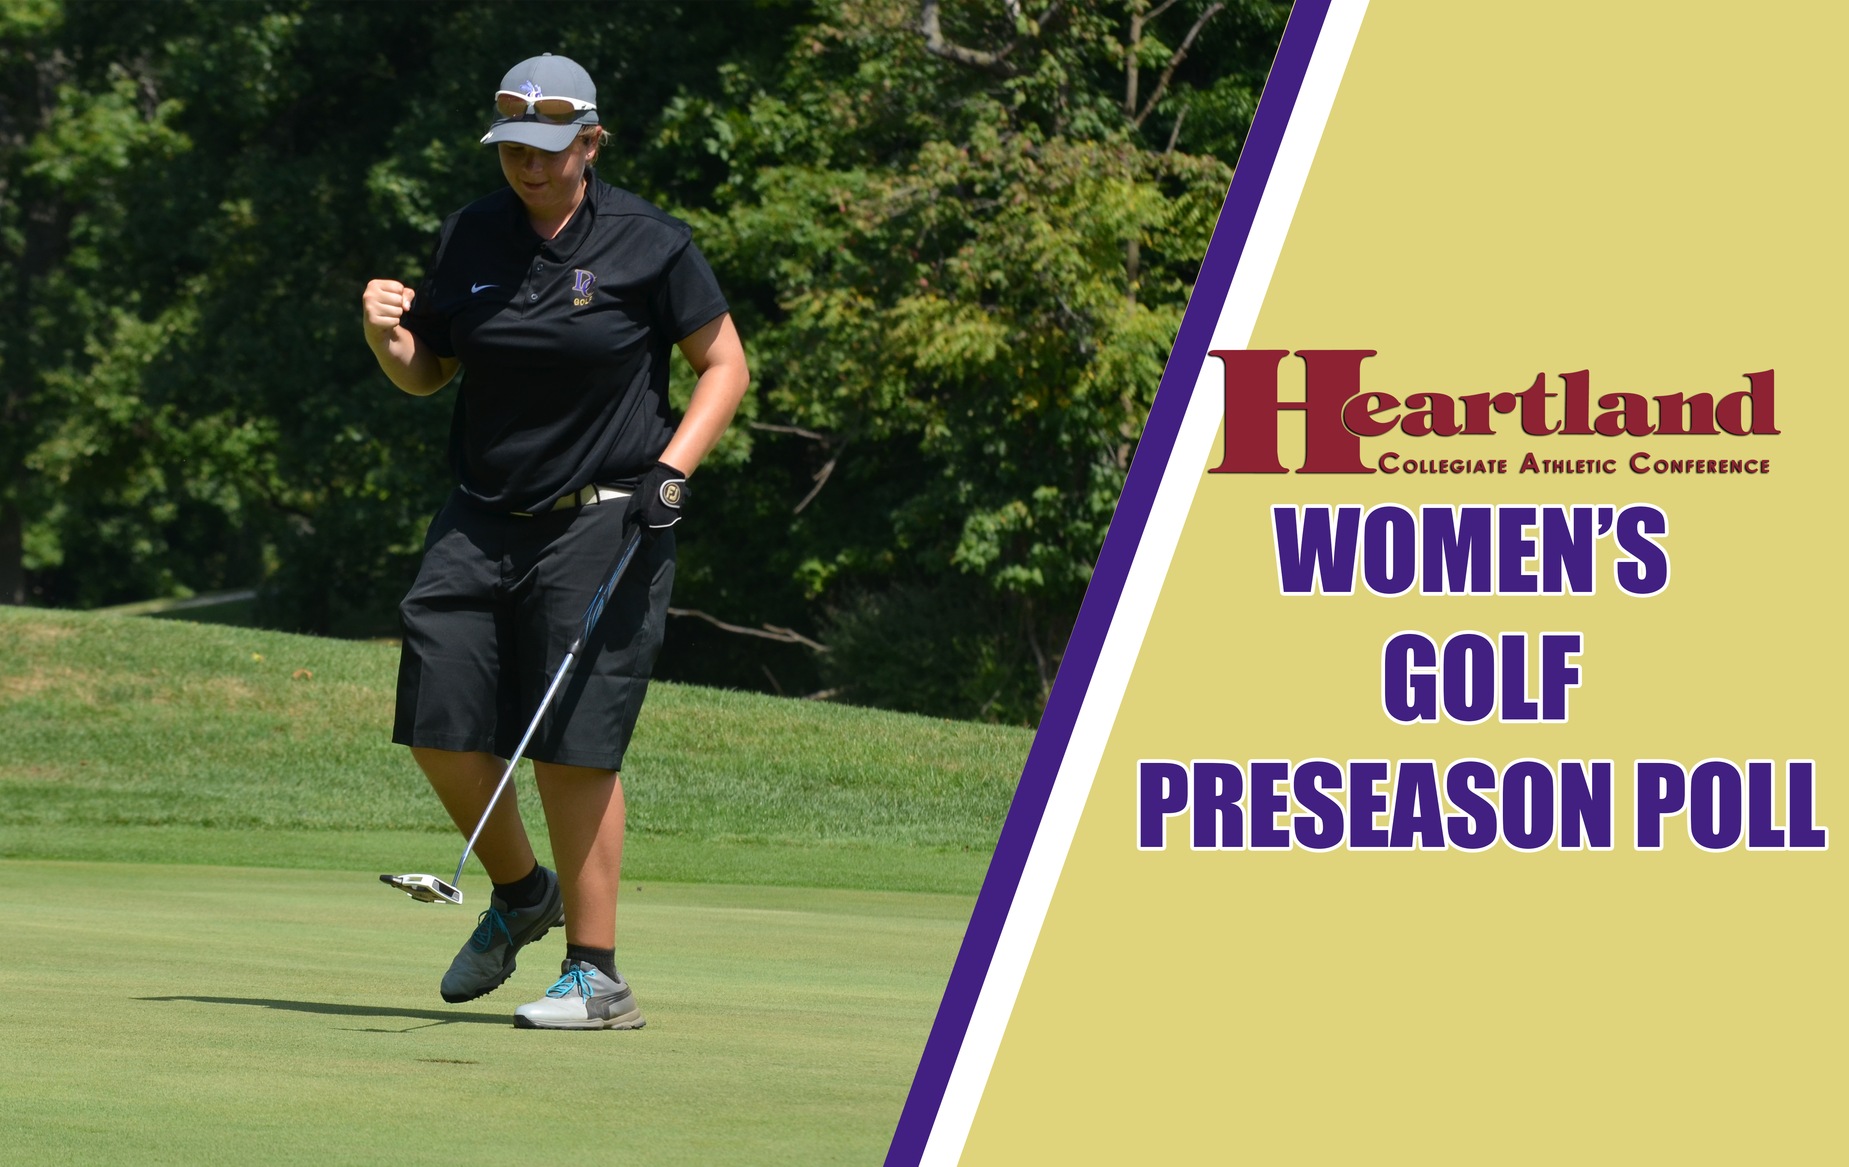 HCAC Releases Women's Golf Preseason Poll